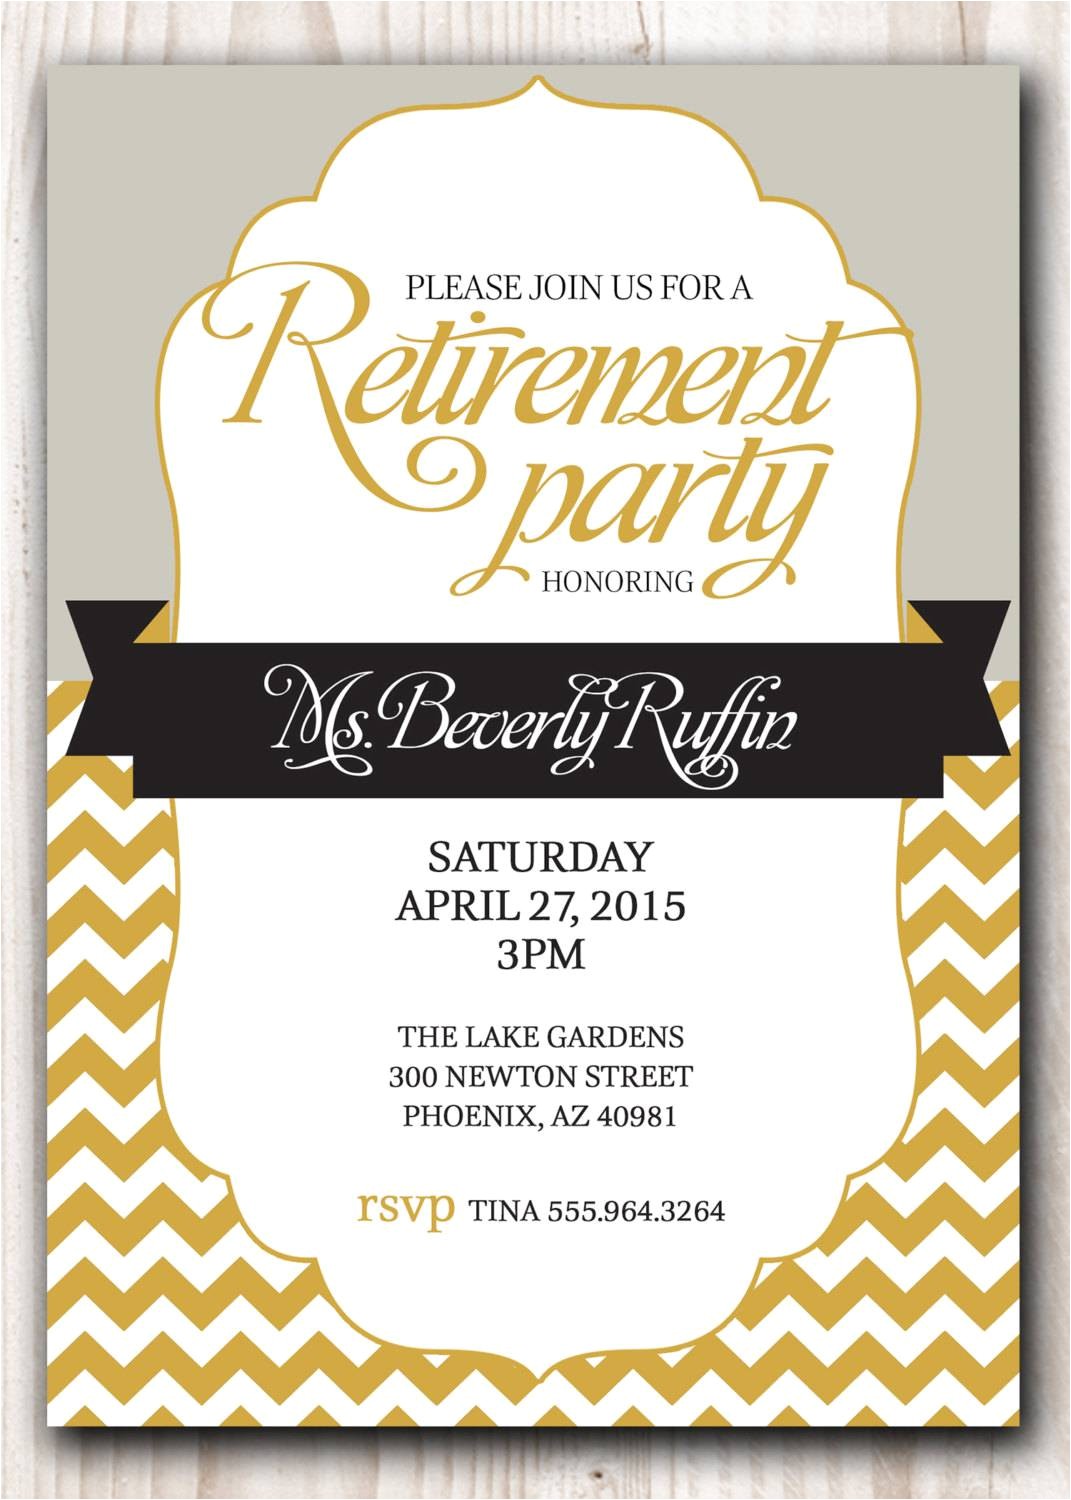 Retirement Party Invite Template Retirement Party Invitation Template Party Invitations